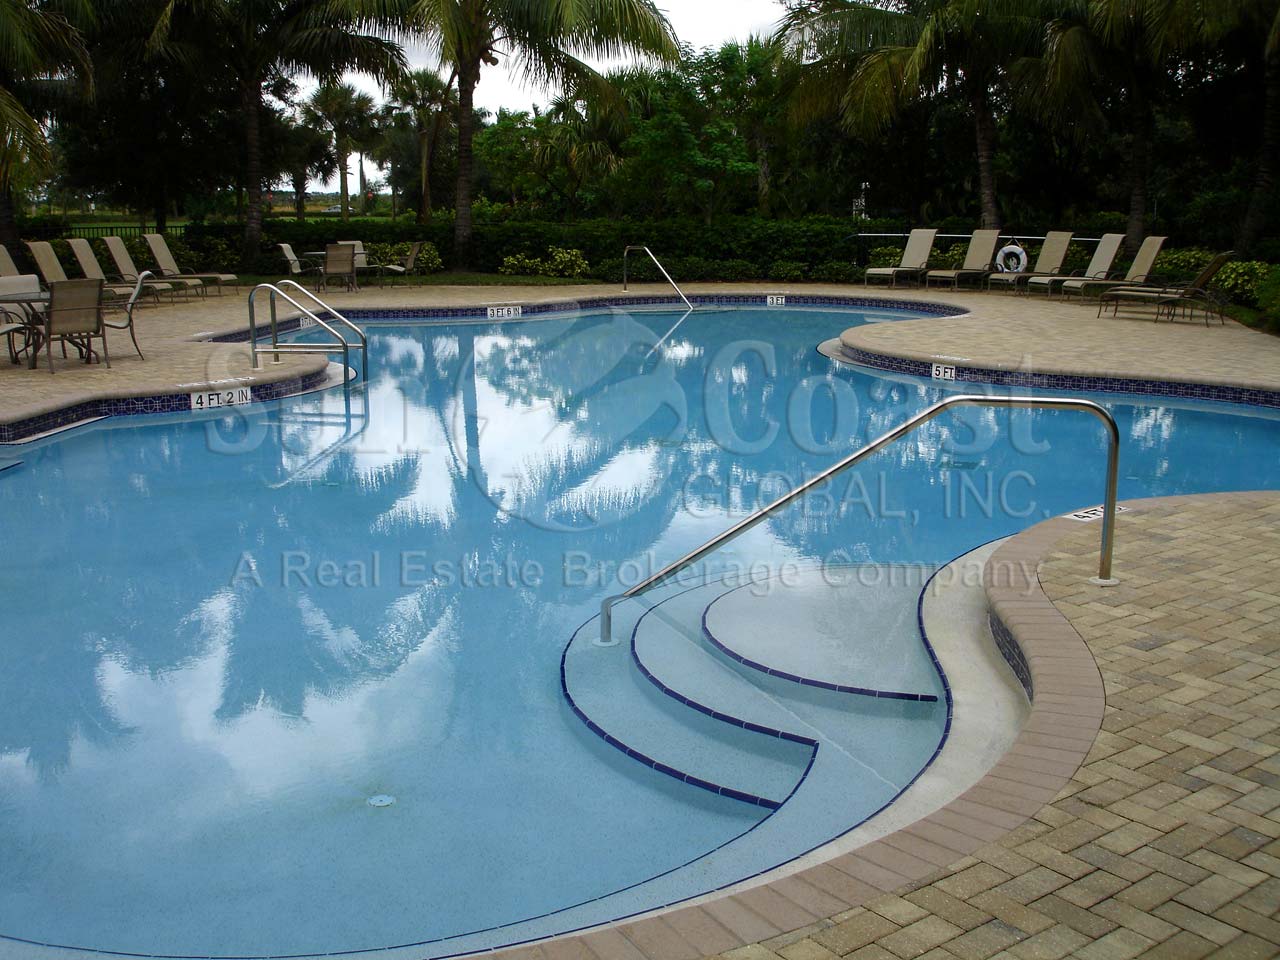 Serena Community Pool and Sun Deck Furnishings